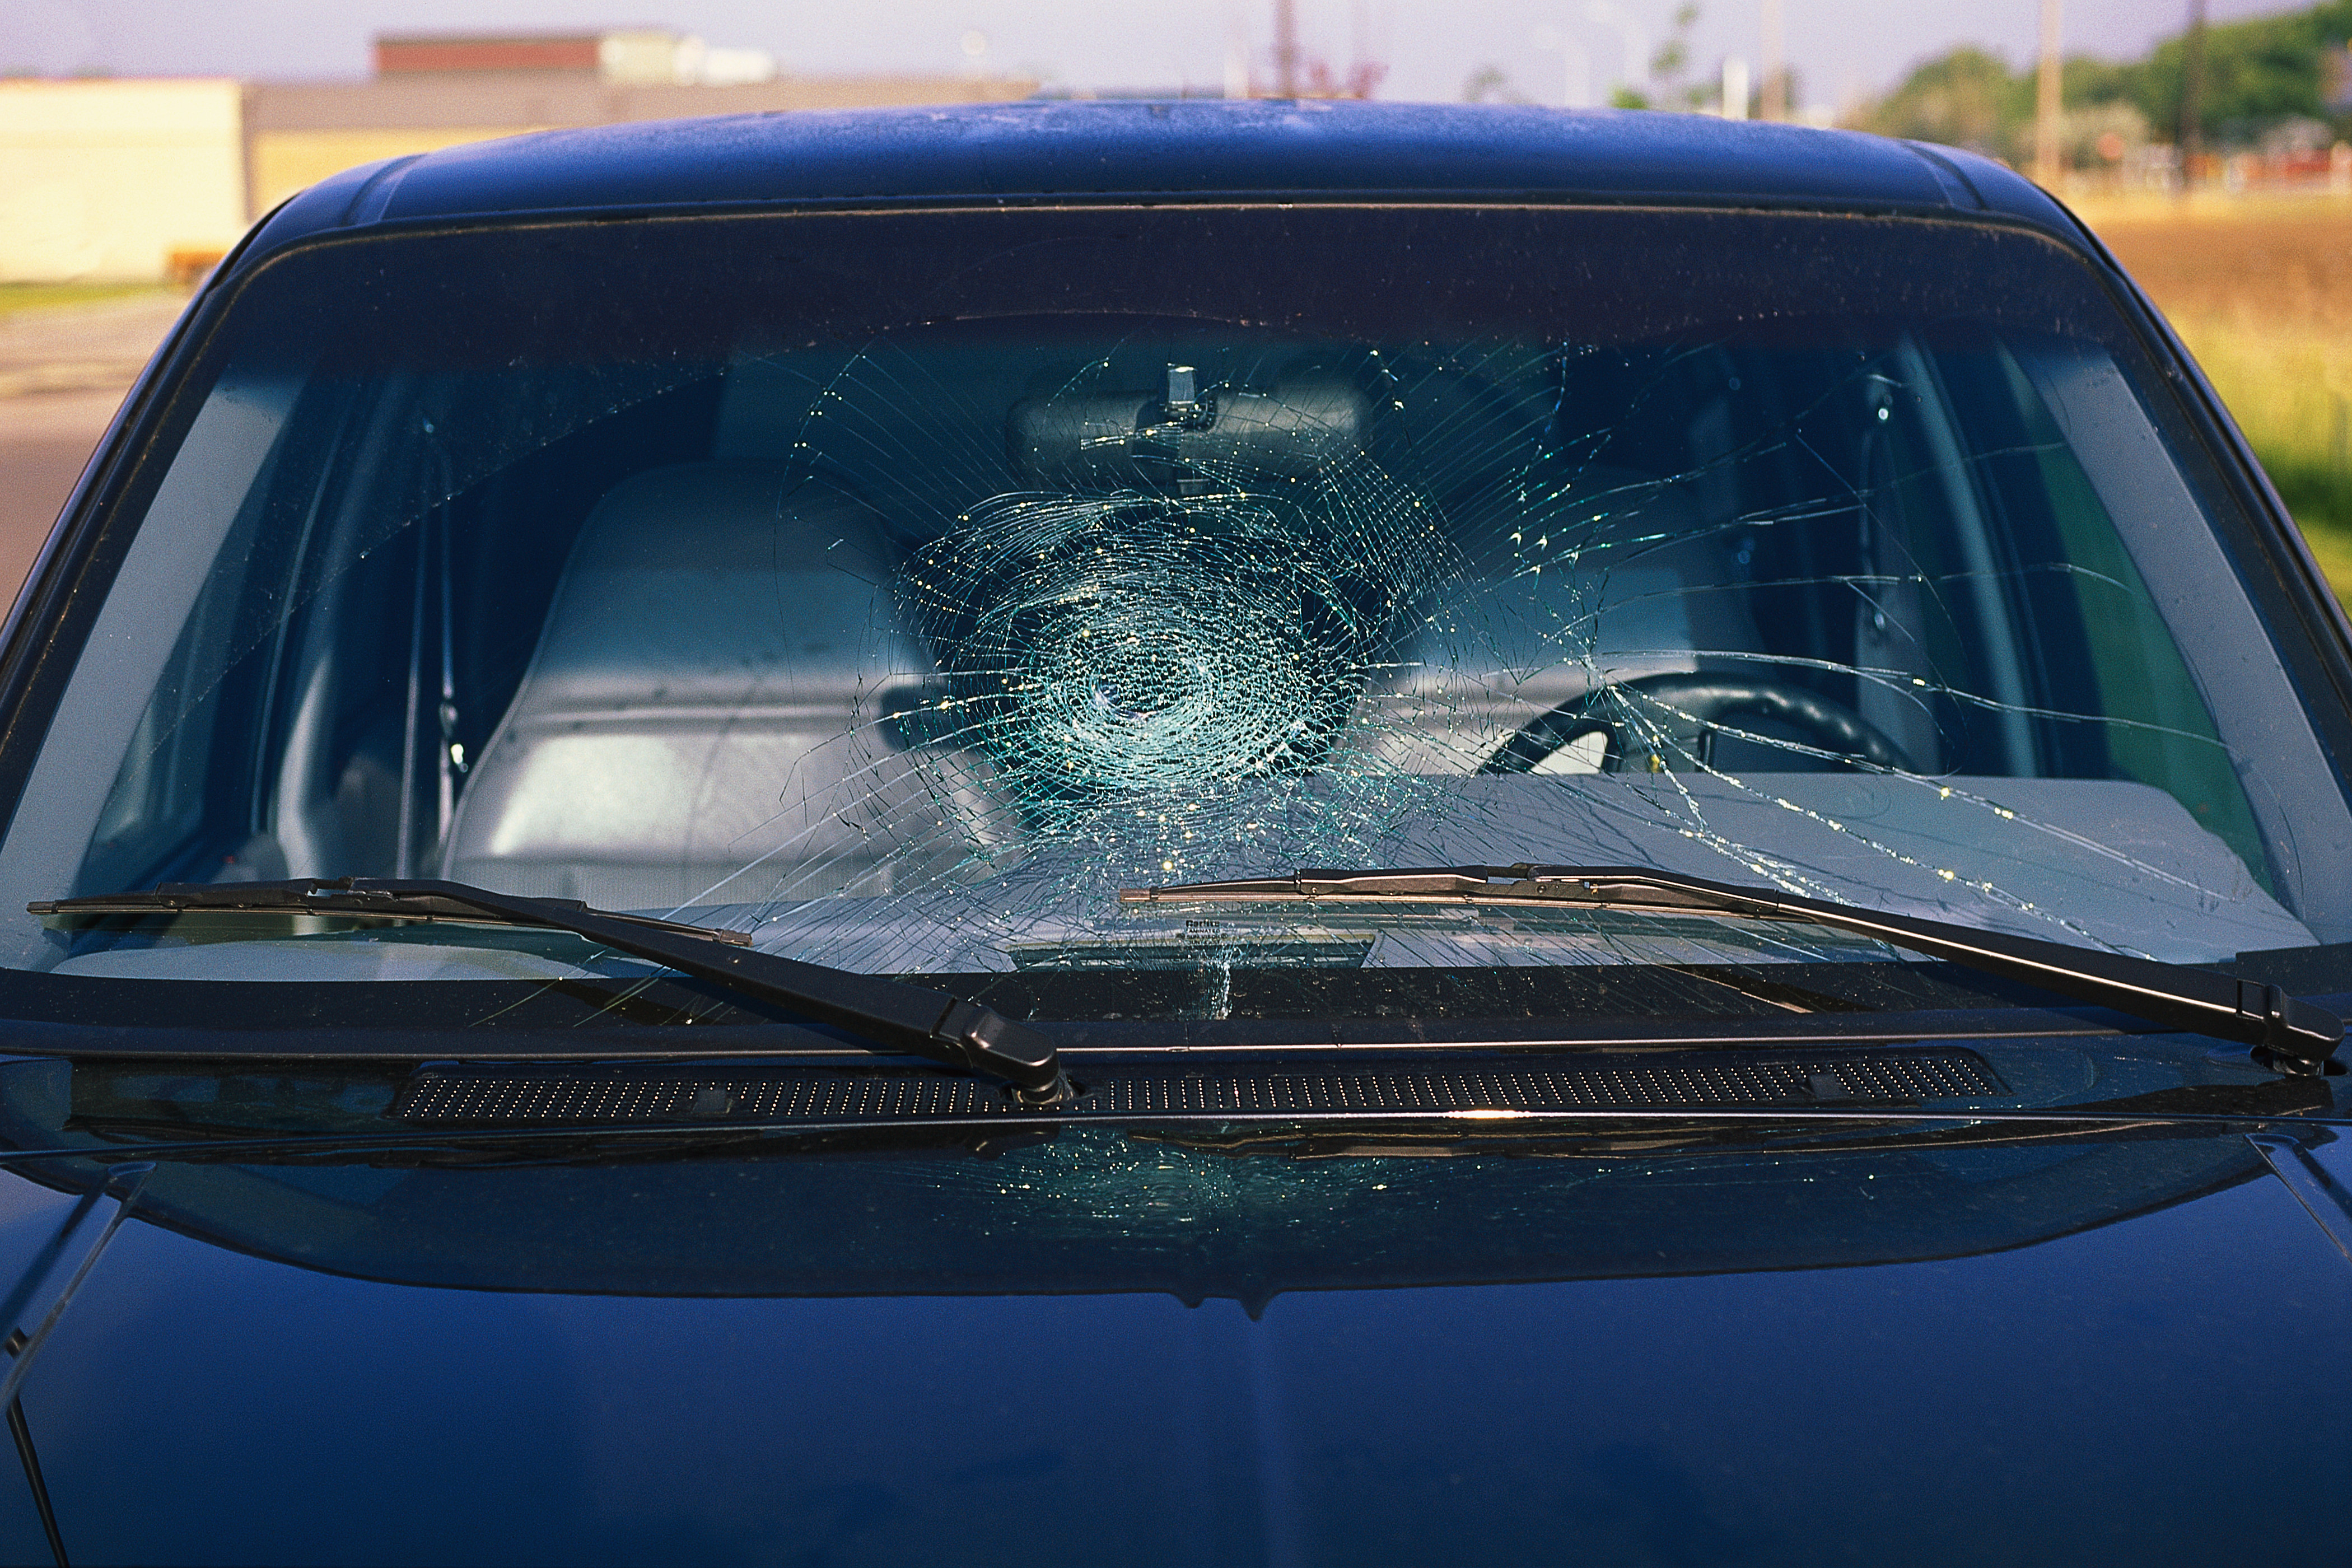 Разбитое лобовое стекло машины. Лобовое стекло. Стекло автомобиля. Лобовое стекло авто. Разбитое лобовое стекло.